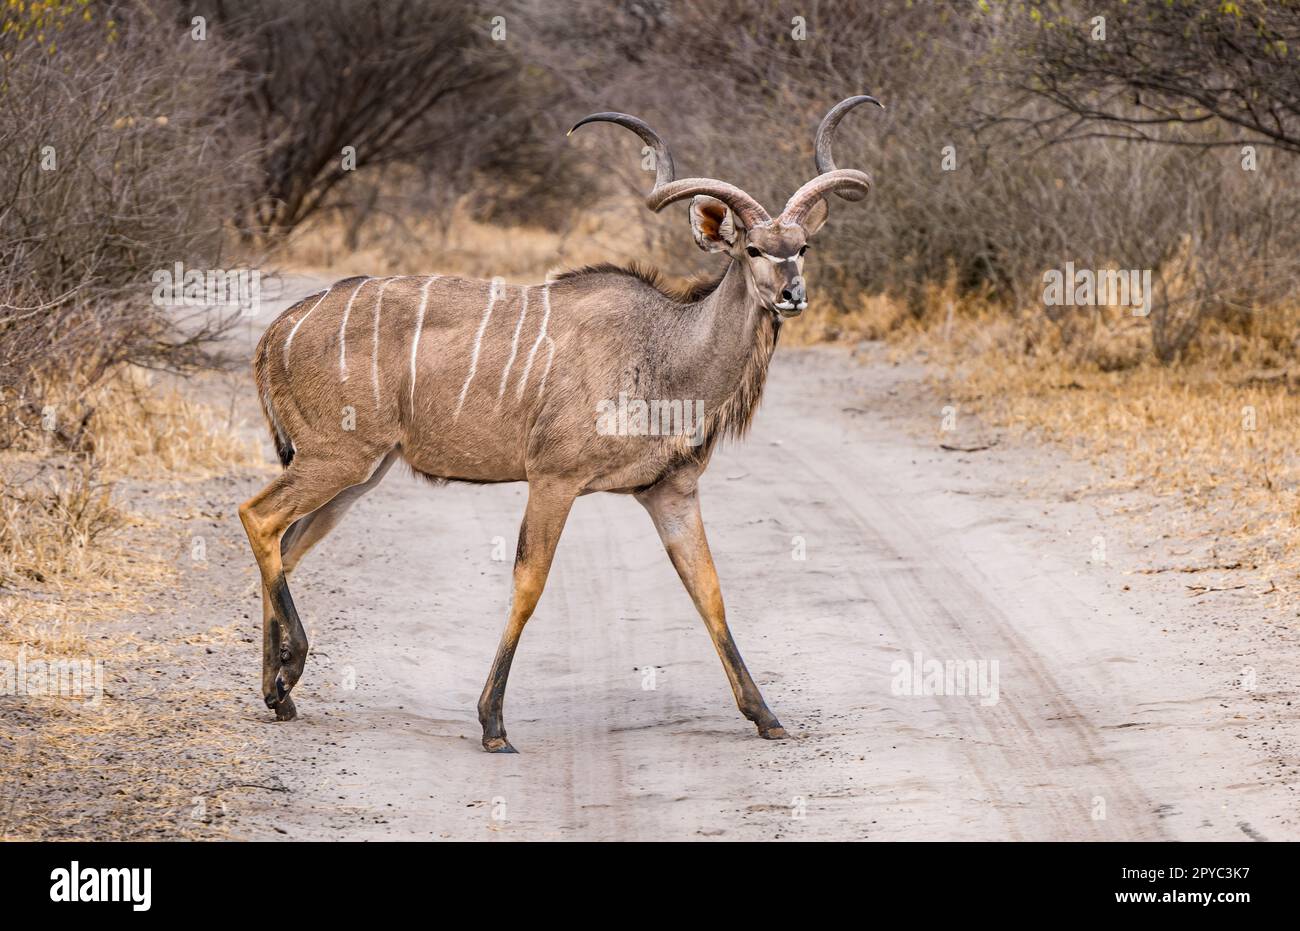 A male horned kudu antelope (Tragelaphus strepsiceros) crossing a dirt track, Kalahari Desert, Botswana, Africa Stock Photo